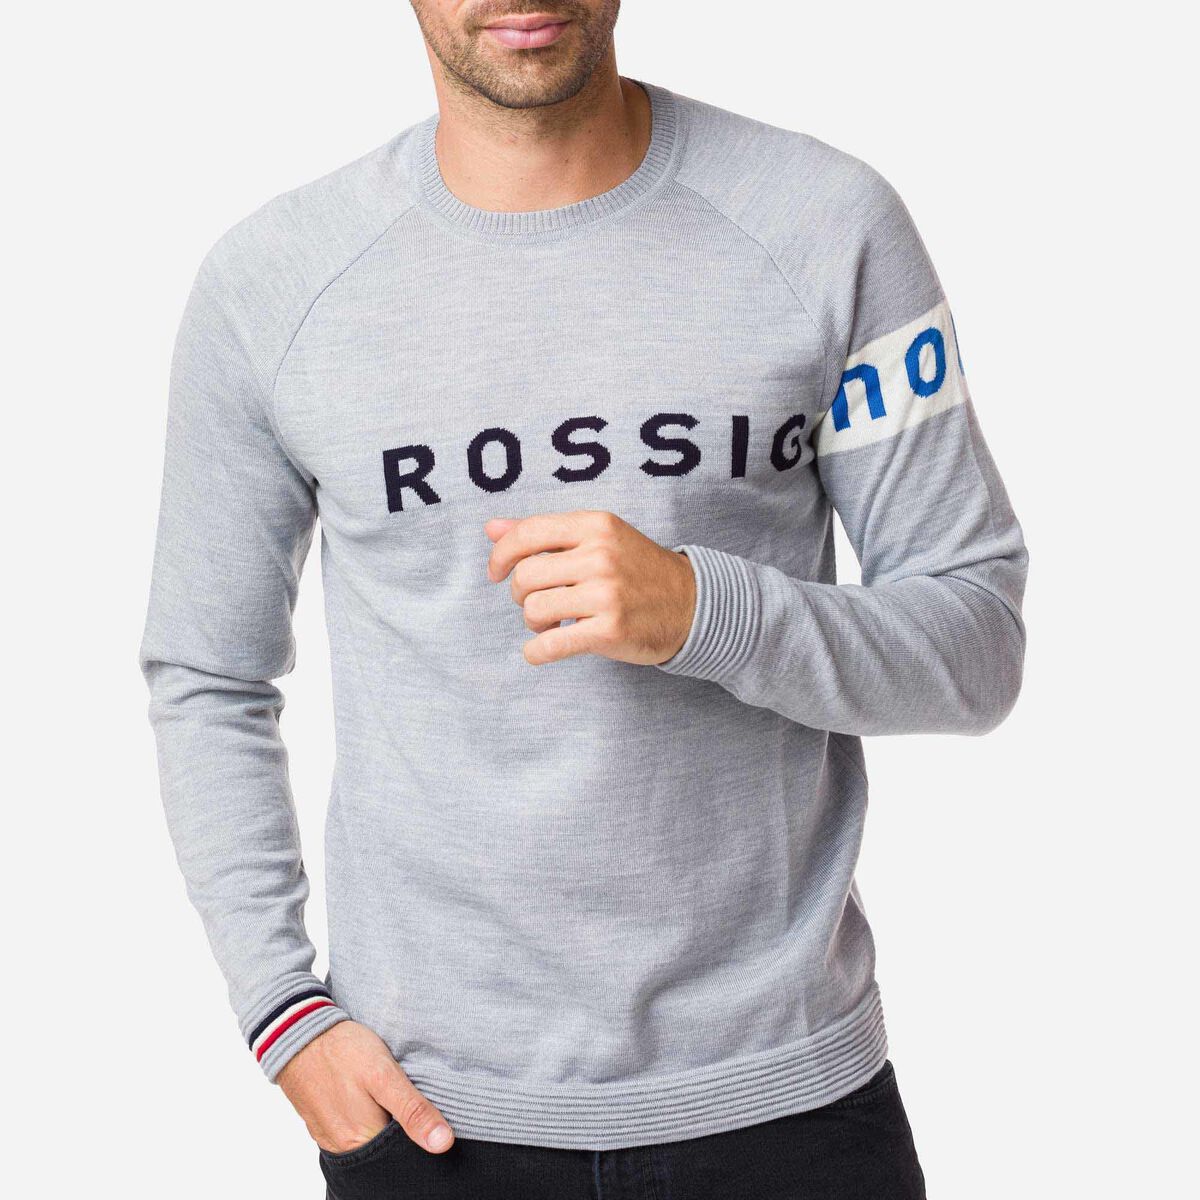 Men's Rossignol Crew Neck Sweater